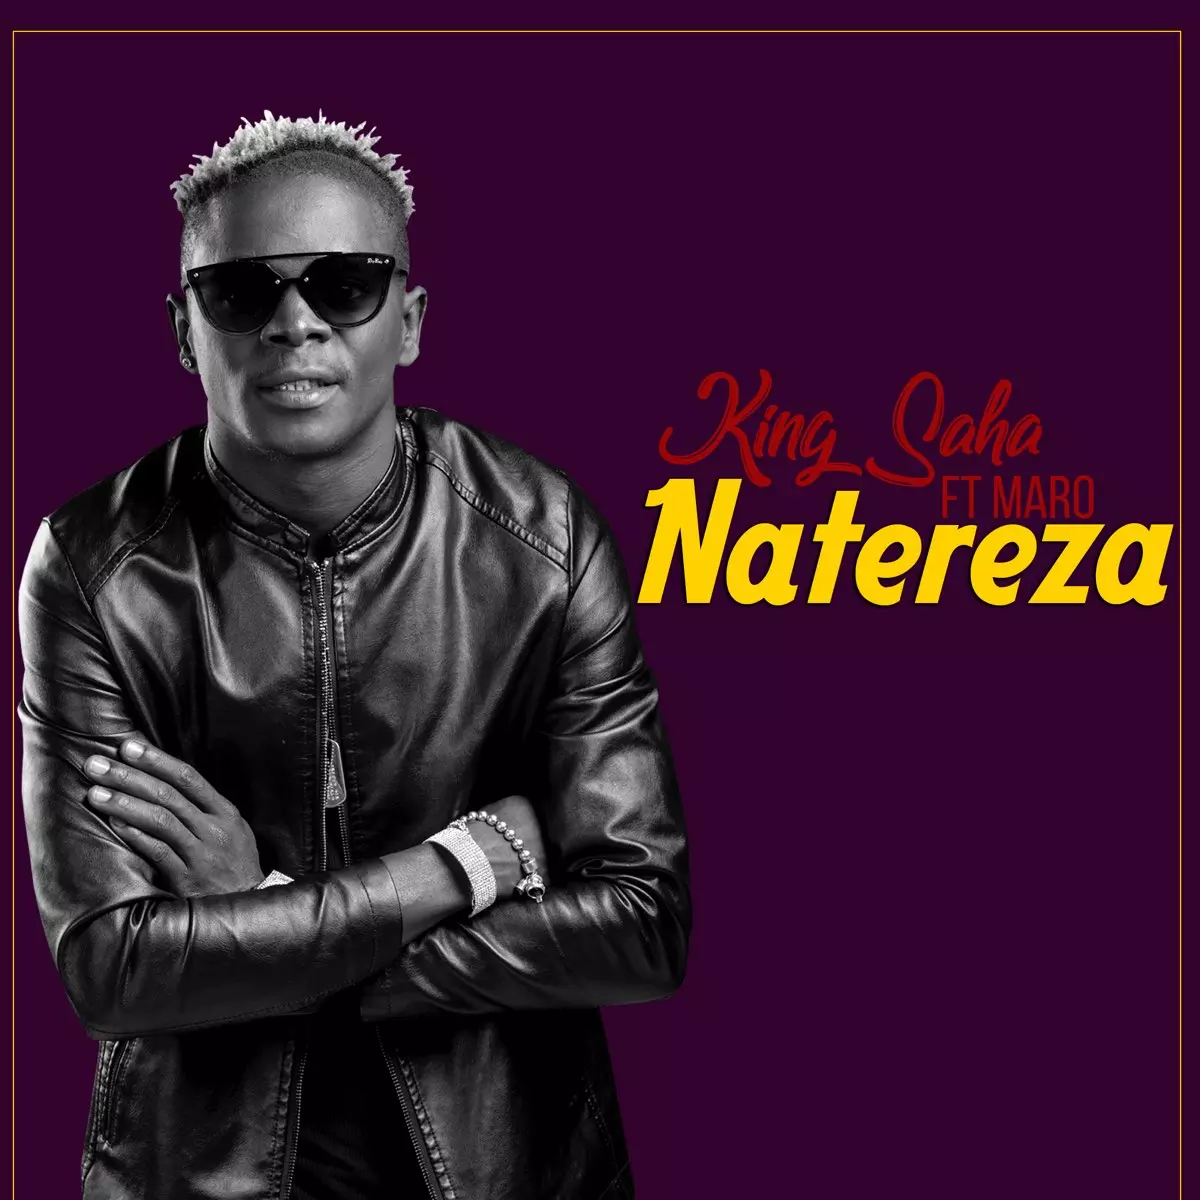 Natereza - Single by King Saha & Maro on Apple Music